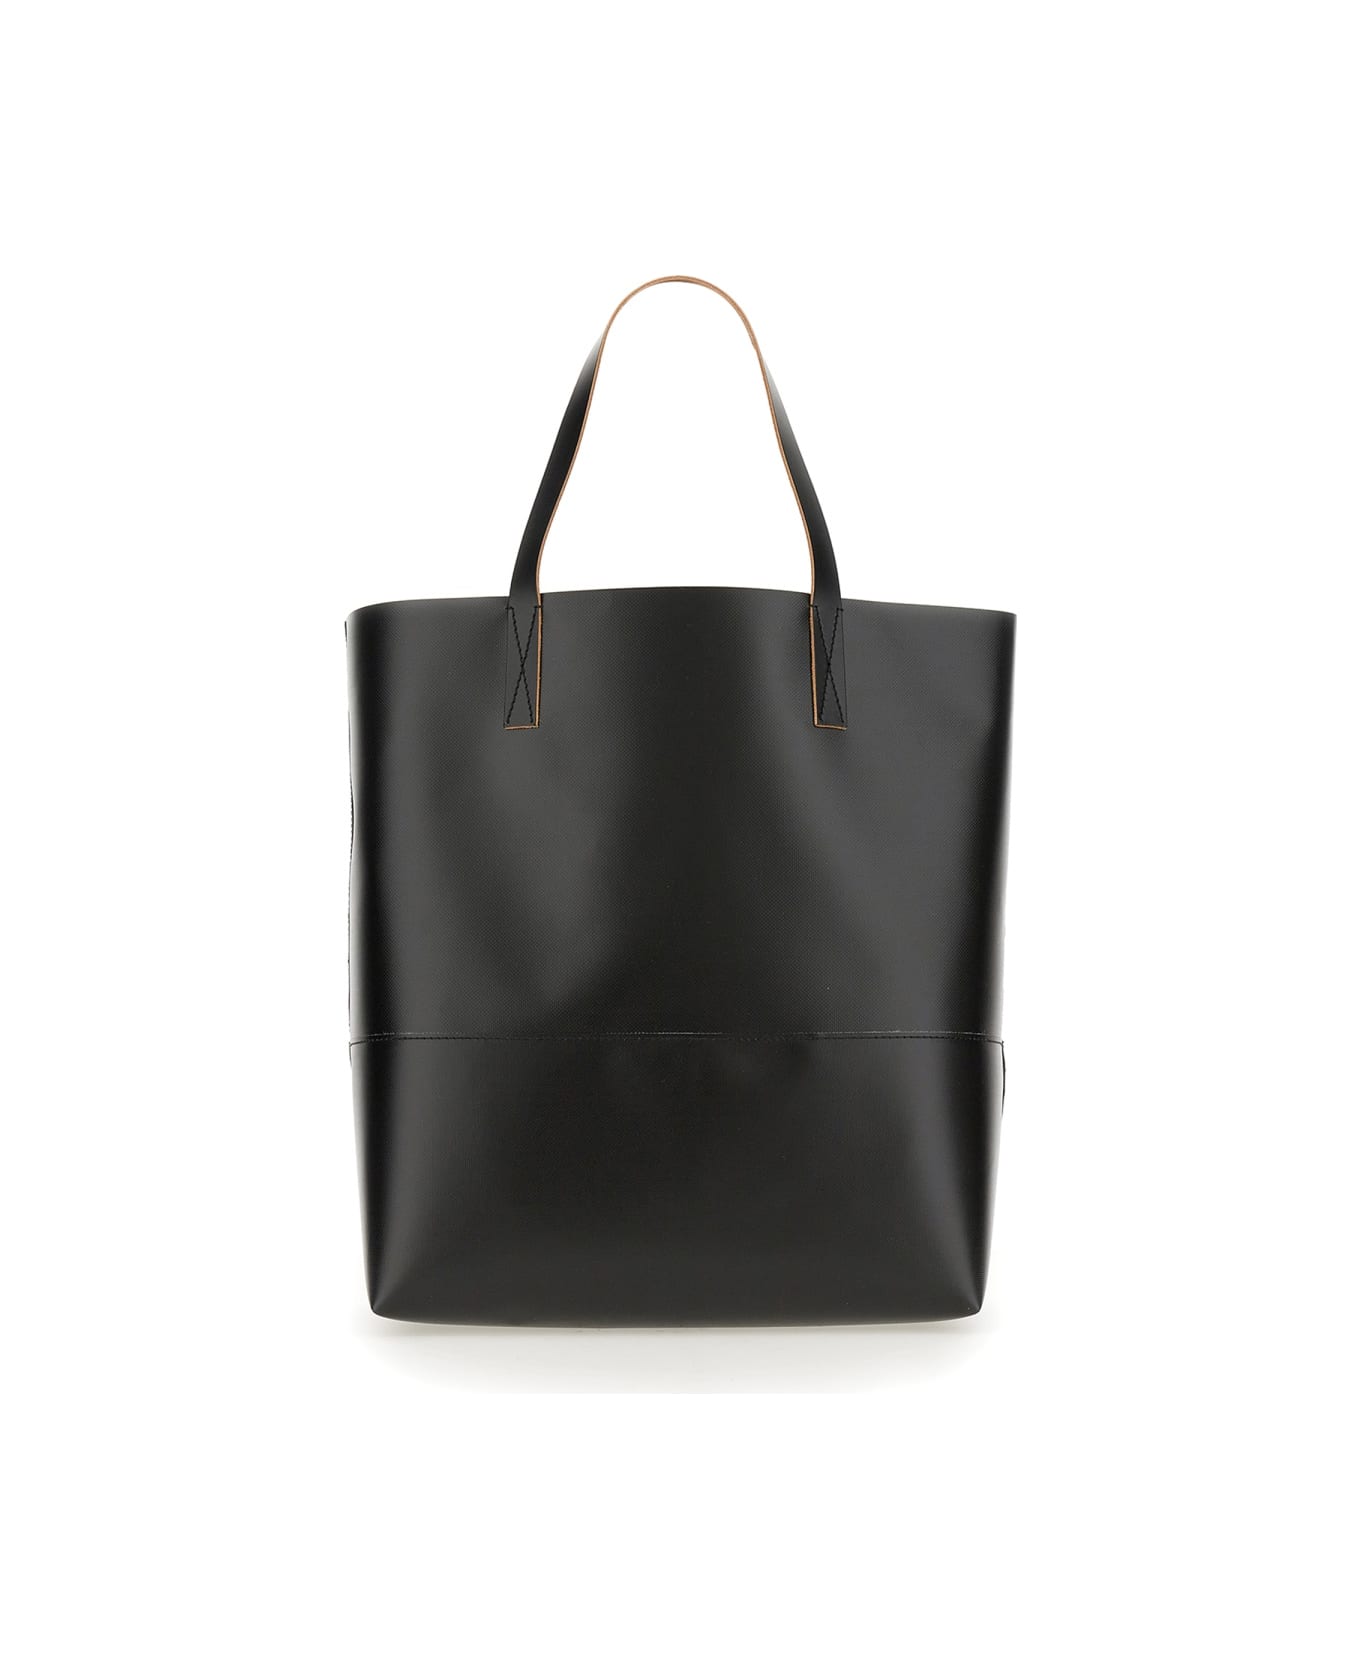 Marni Shopping Bag With Logo - BLACK トートバッグ